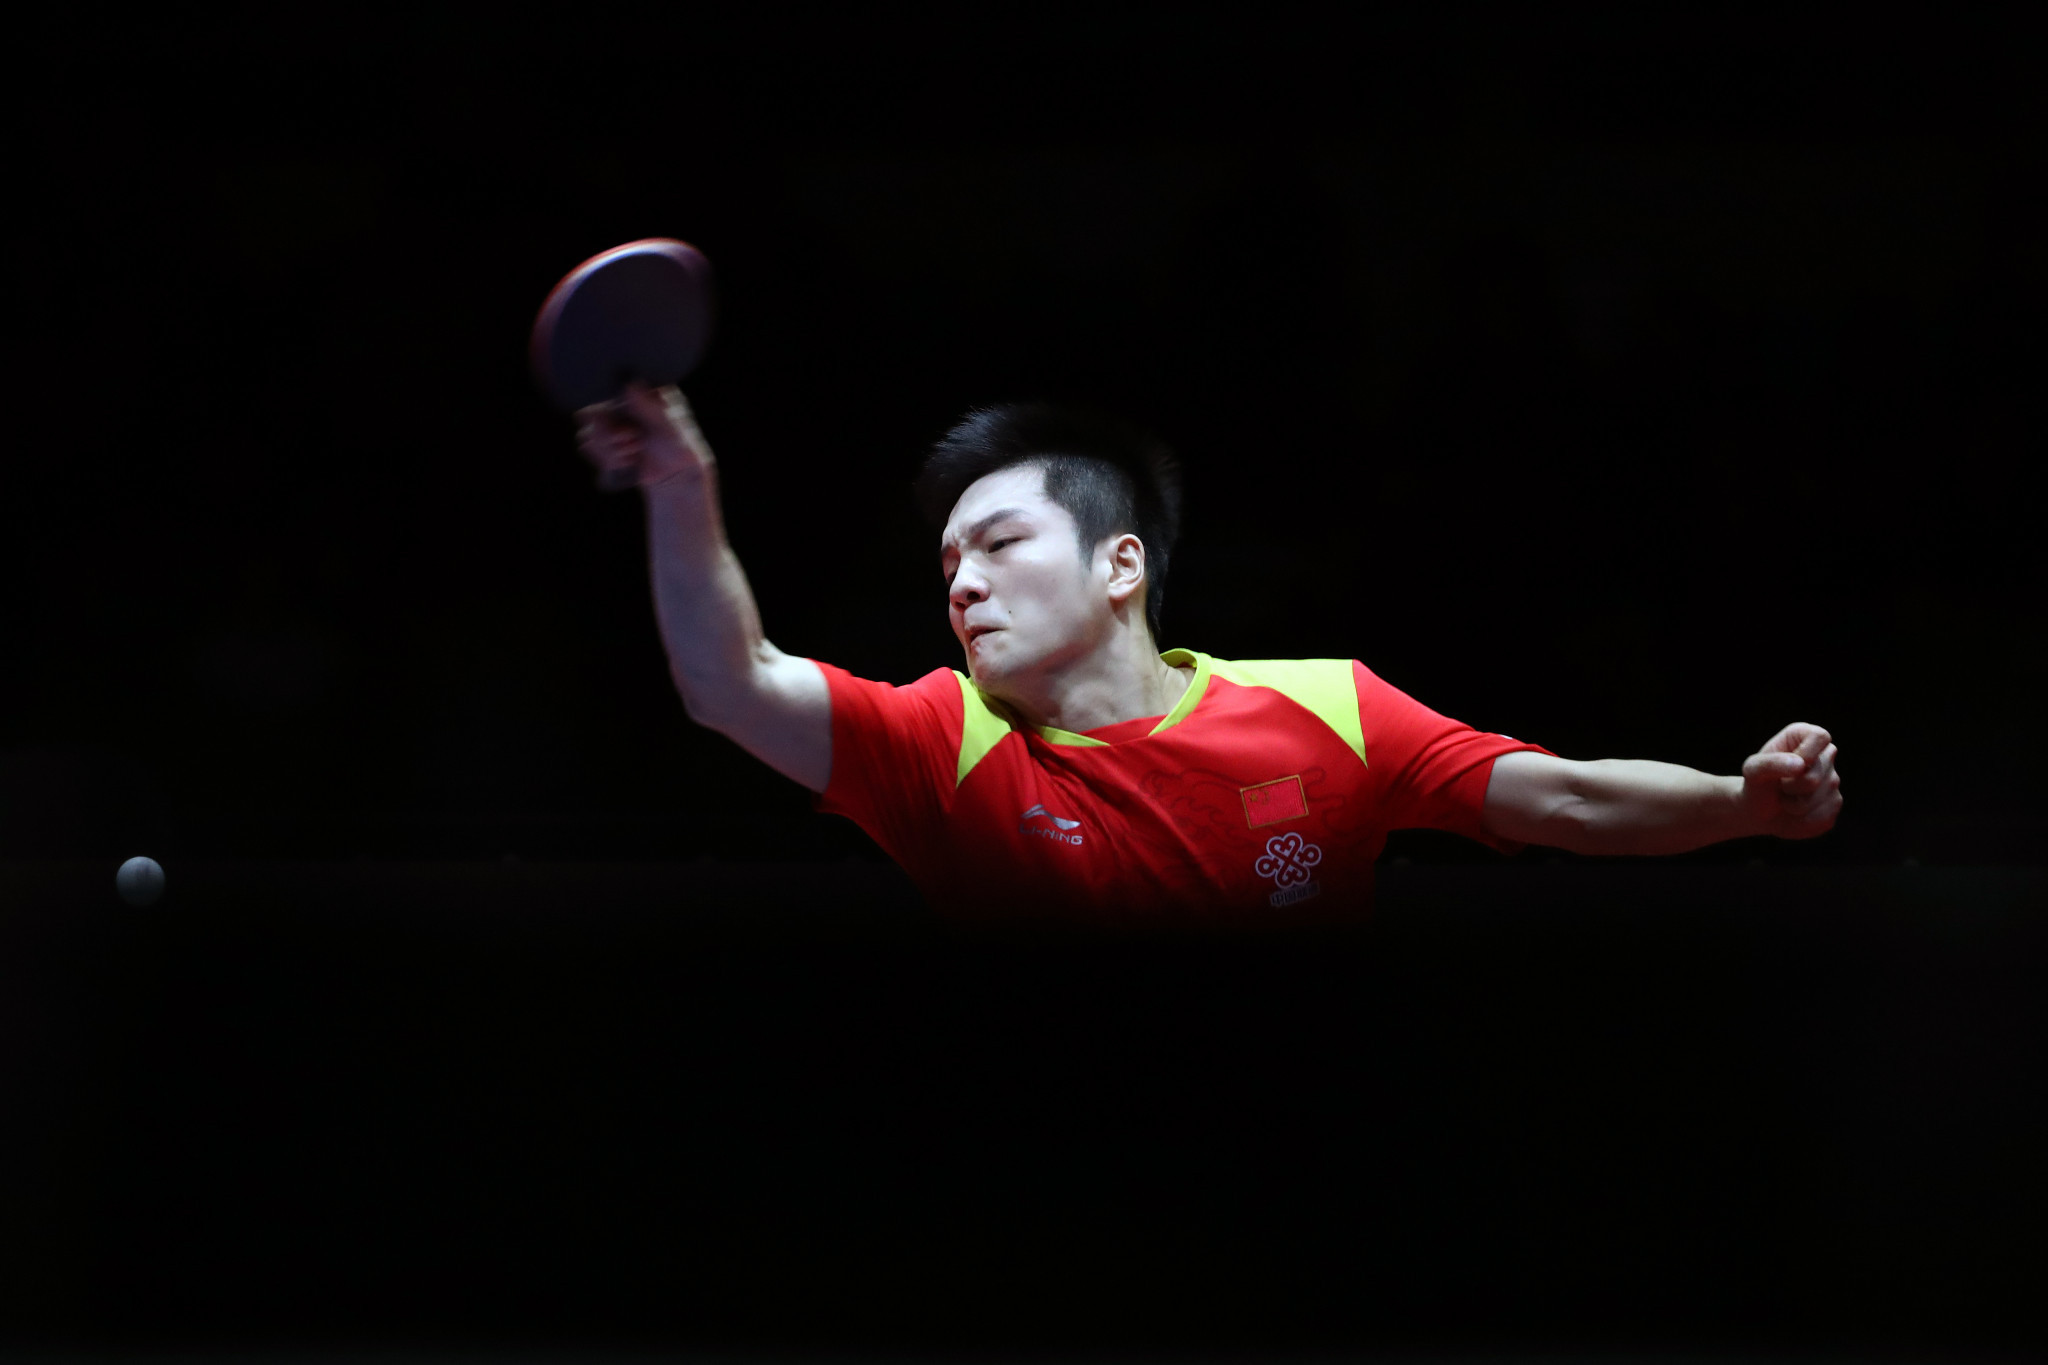 Fan Zhendong defended his men's title in Yokohama ©Getty Images